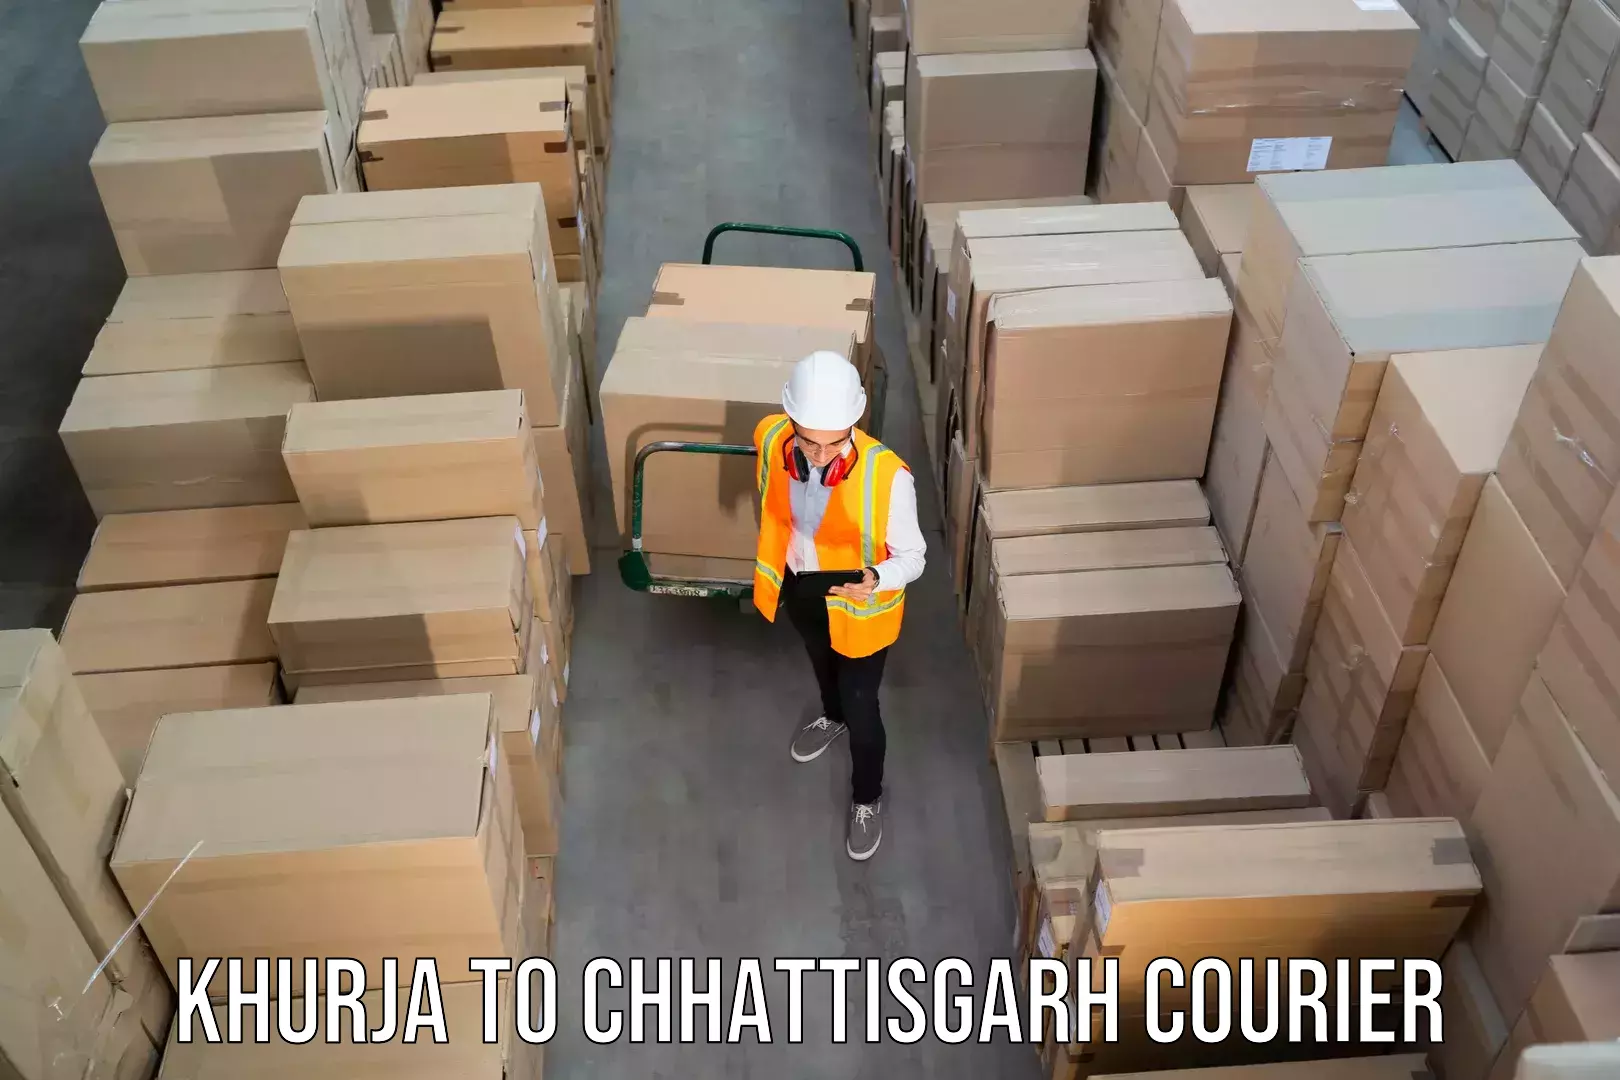 Courier service comparison Khurja to Bhatapara